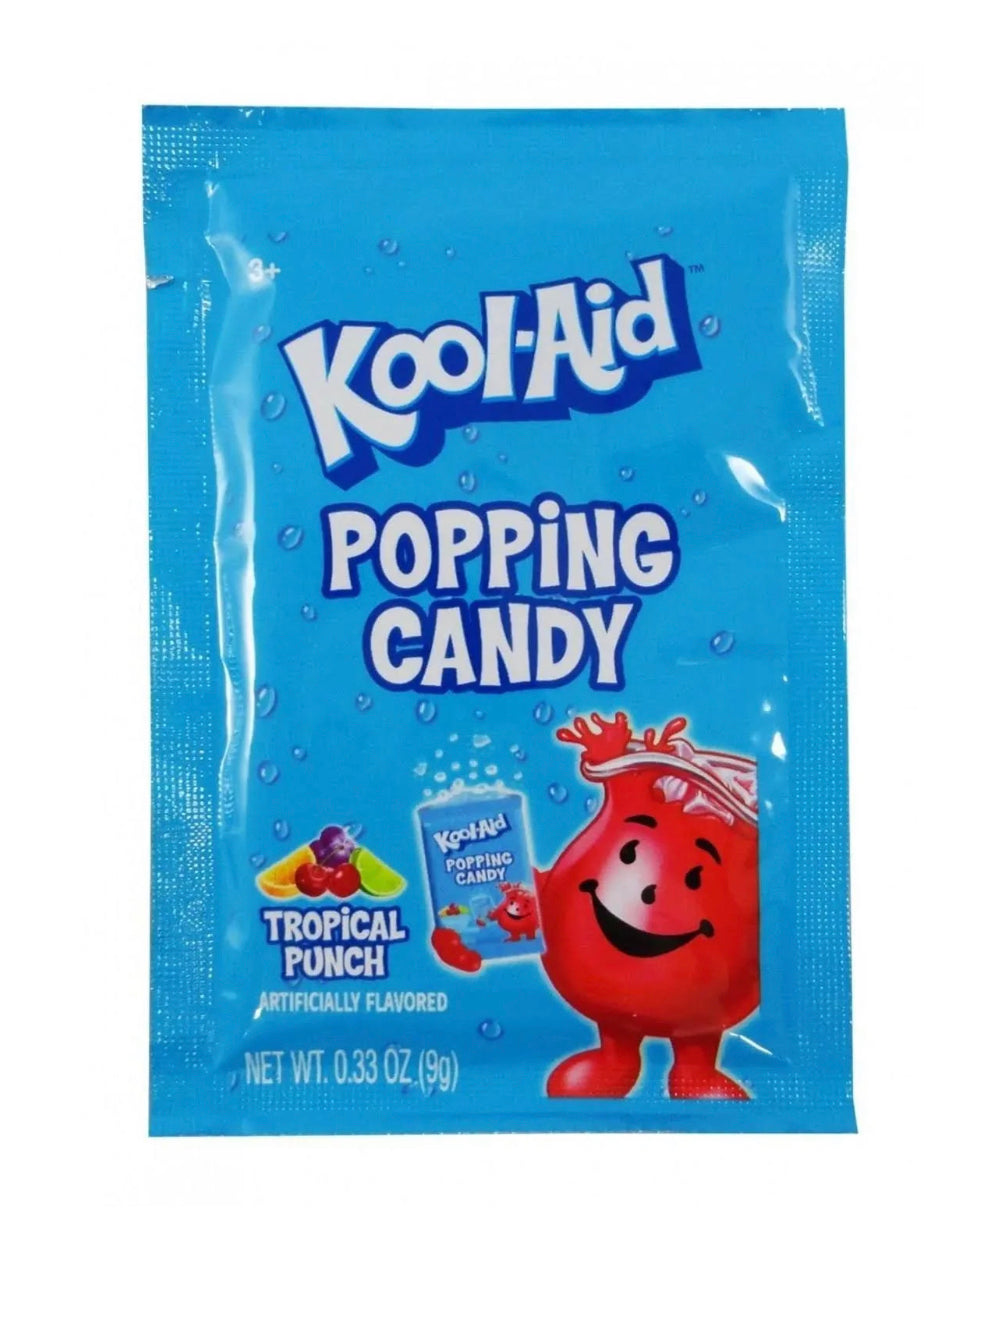 Koolaid Popping Candy